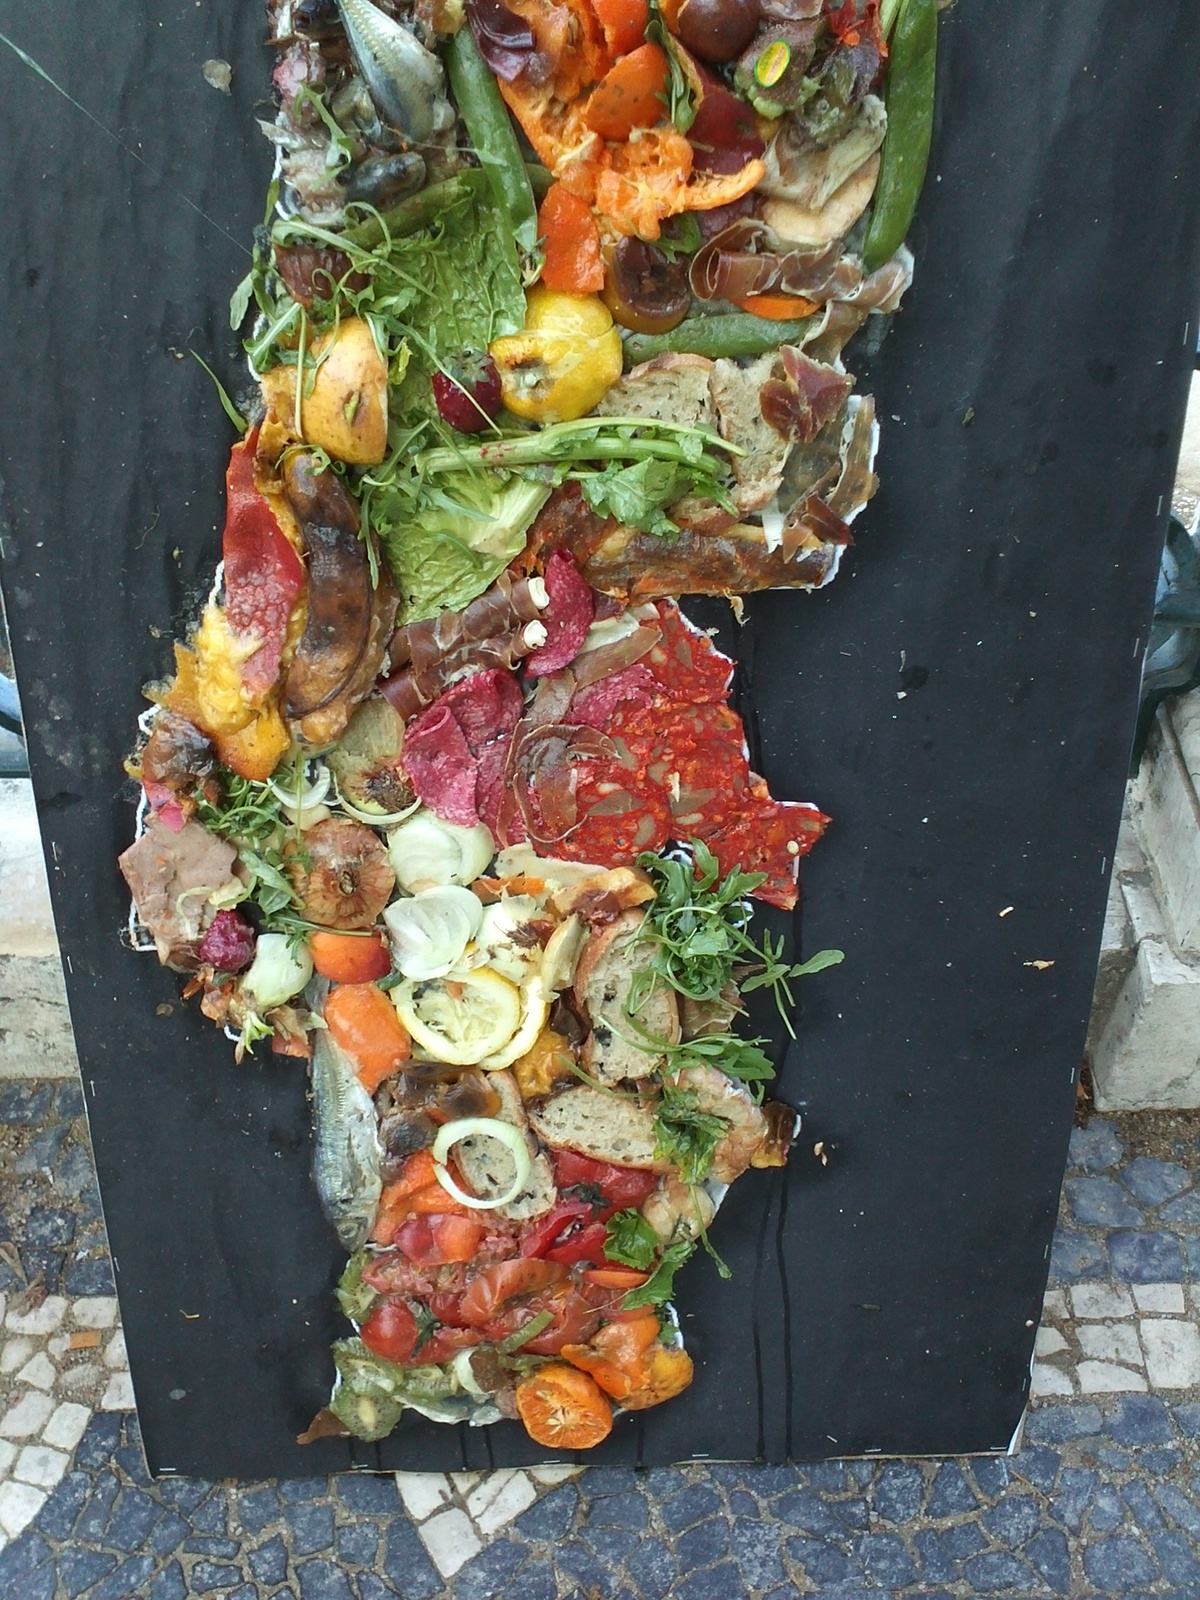 Portugal Podre installation arts Rotten Food